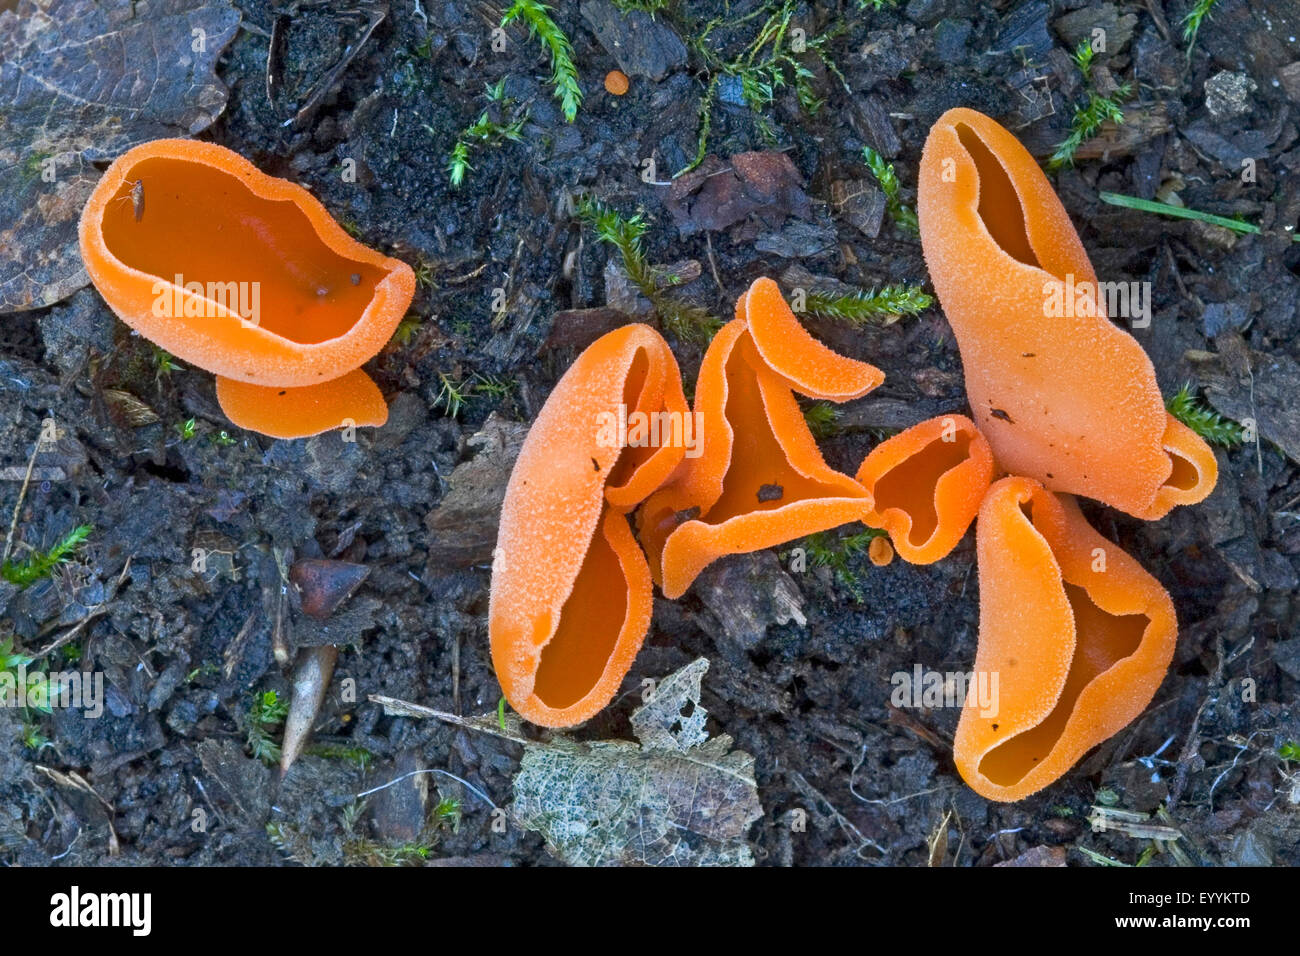 Orange peel fungus (Aleuria aurantia), several fruiting bodies on forest floor, Germany Stock Photo